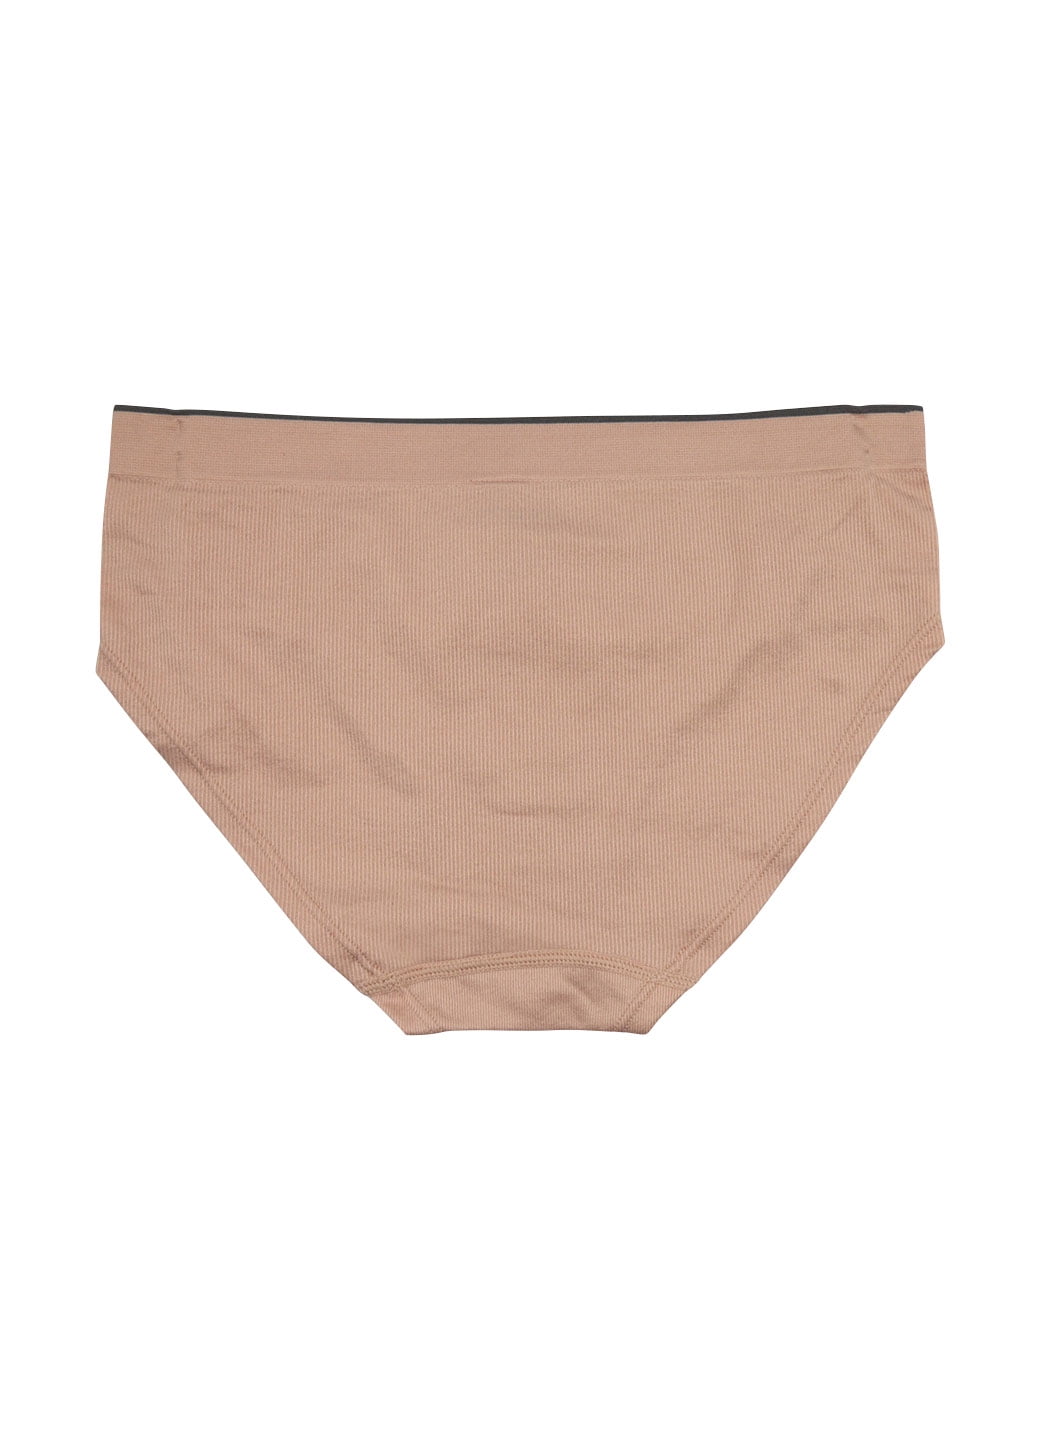 Buy RBX women 5 pack brand logo pull on seamless panties peach